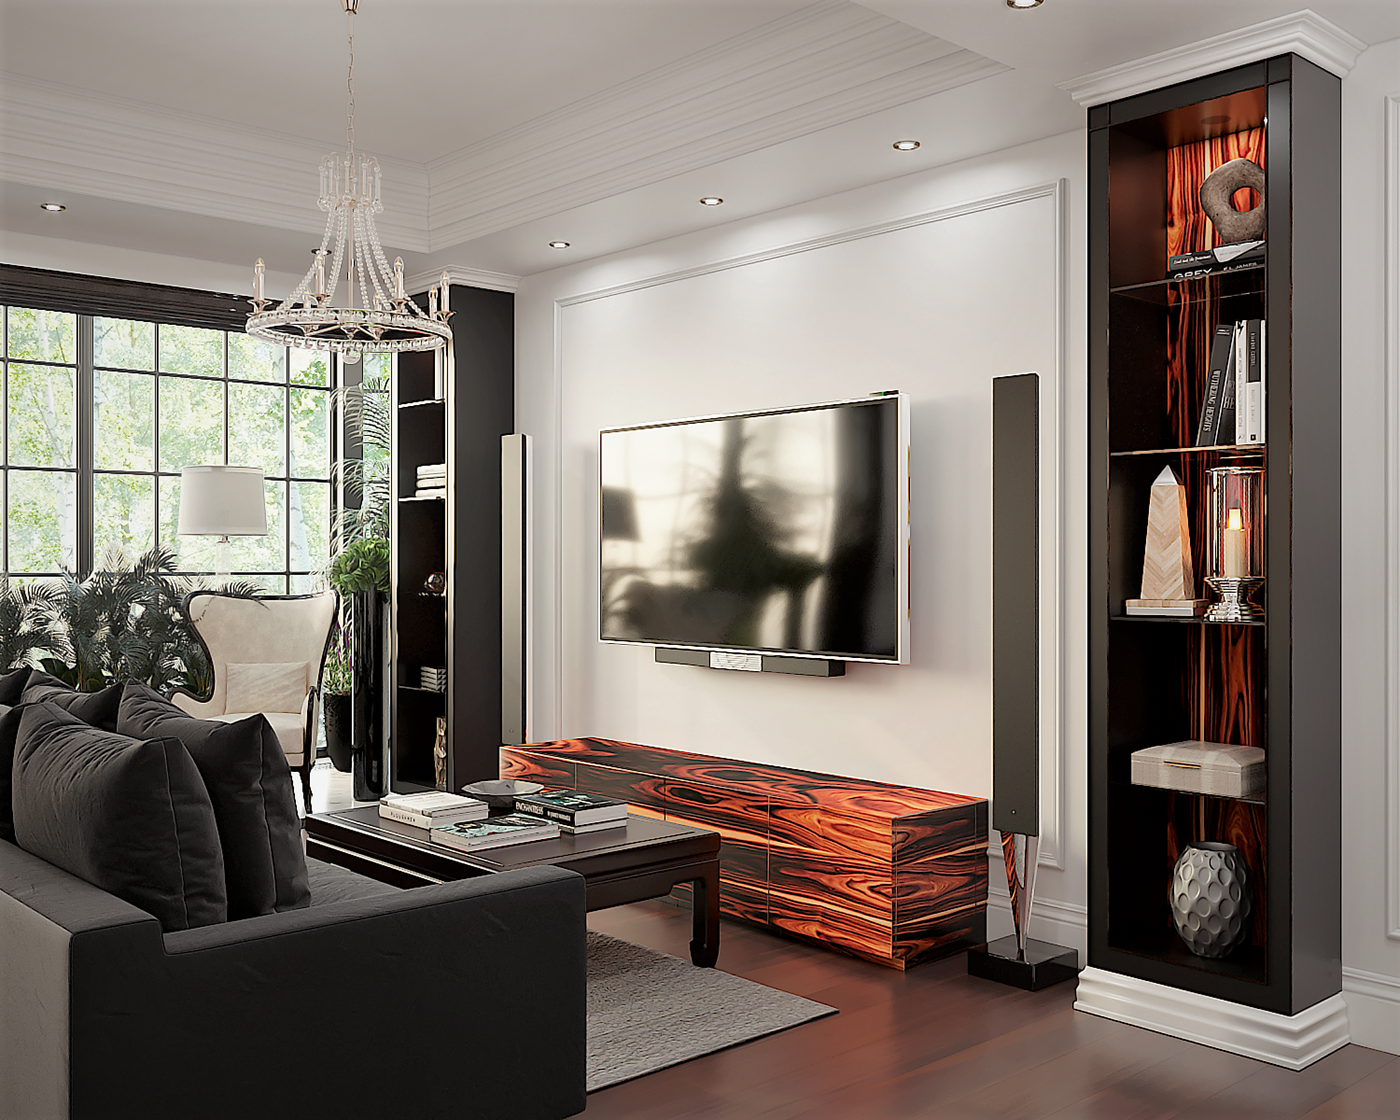 Визуализация интерьера Render interior styling визуализация home design luxury houses home trends Luxury Home home styling